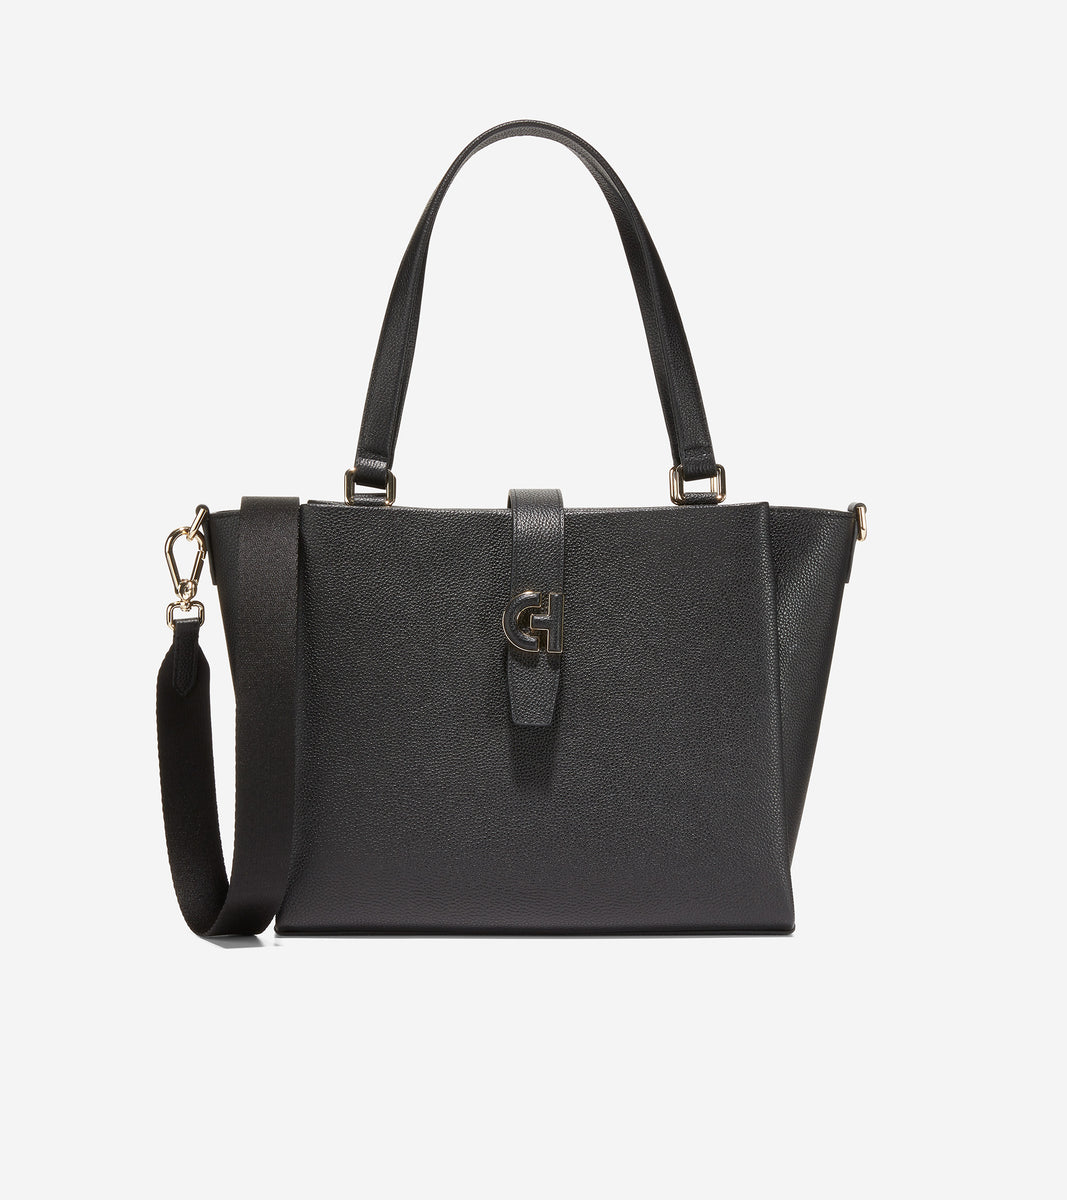 6 Vintage Hand Bag Lot Purse Black Leather Pinky Cole Haan - Etsy | Purses,  Black handbags, Purses and bags